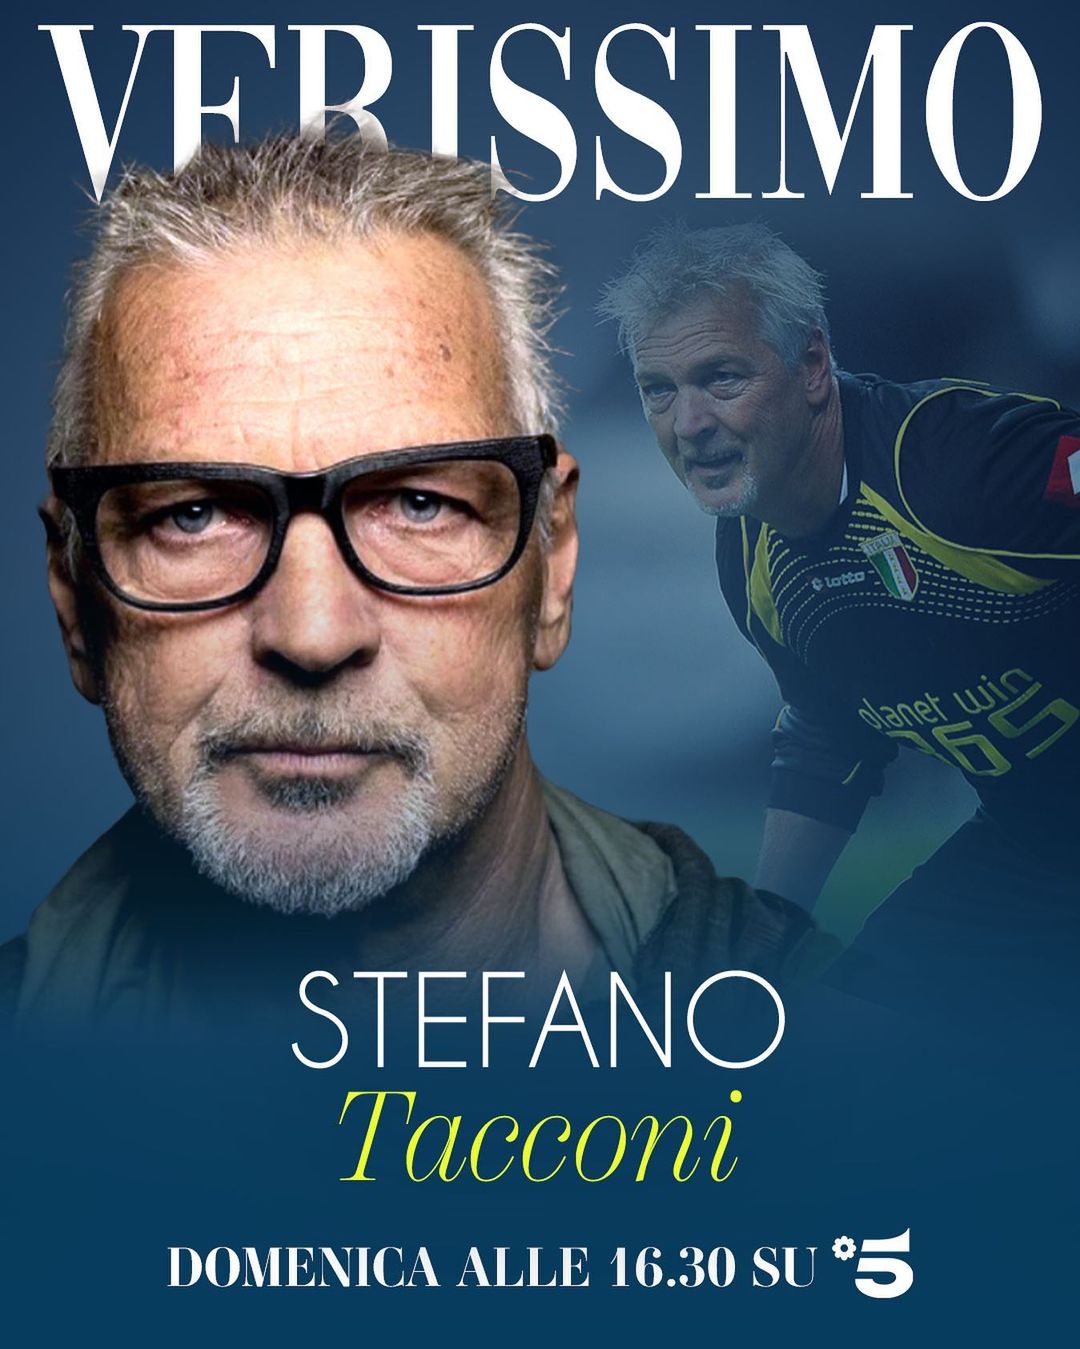 Stefano Tacconi Verissimo